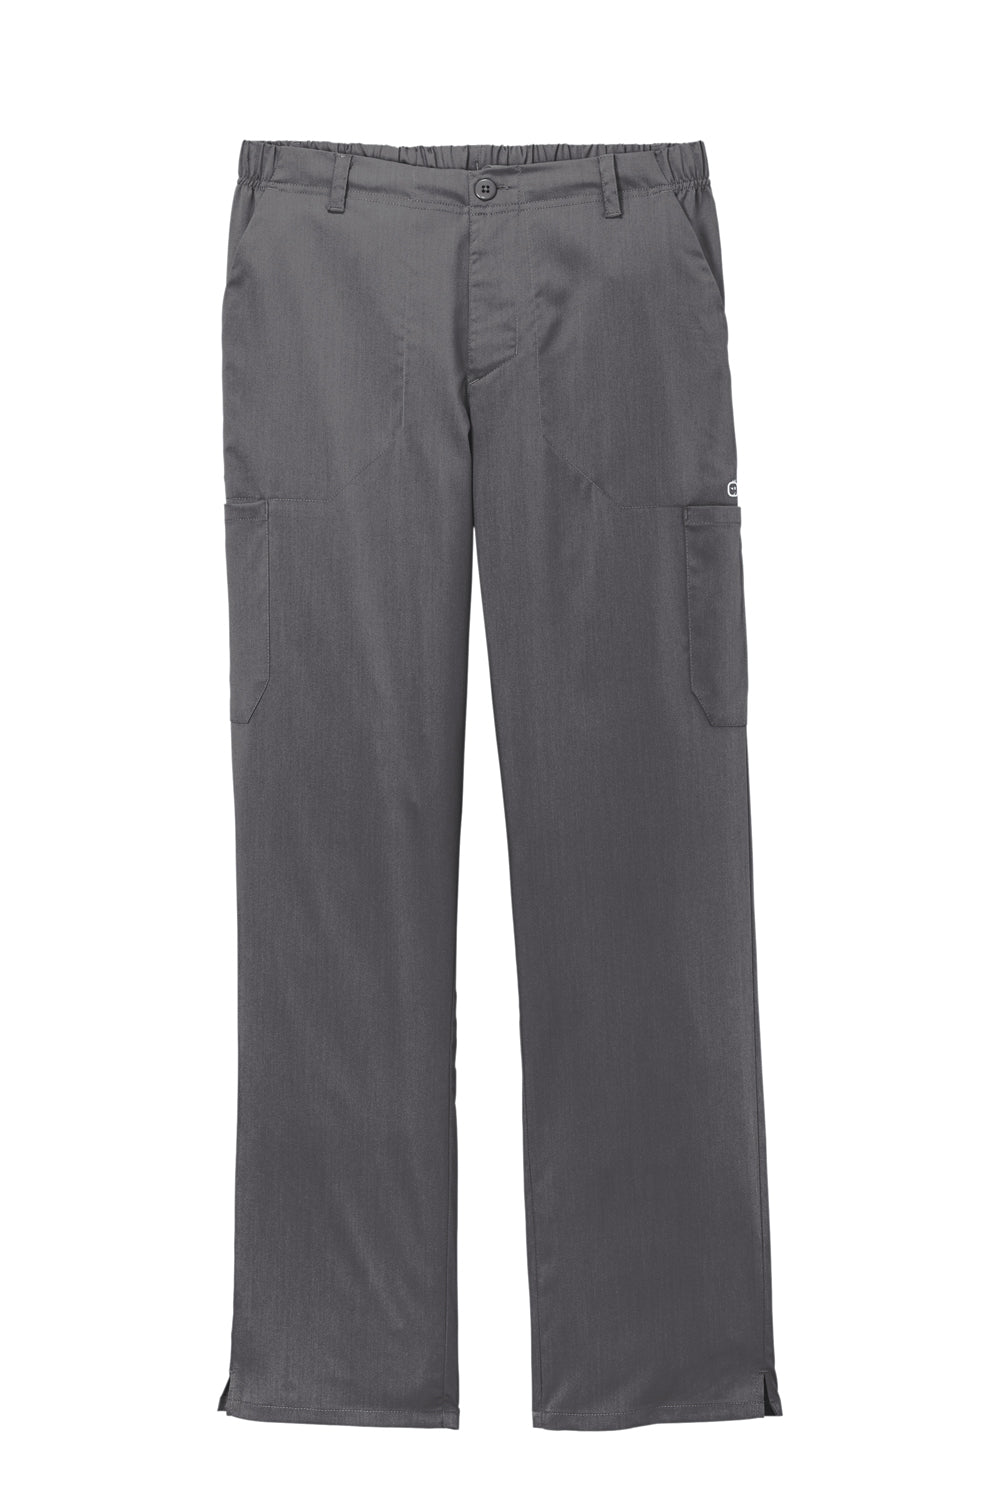 Wonderwink WW5058 Premiere Flex Cargo Pants Pewter Grey Flat Front